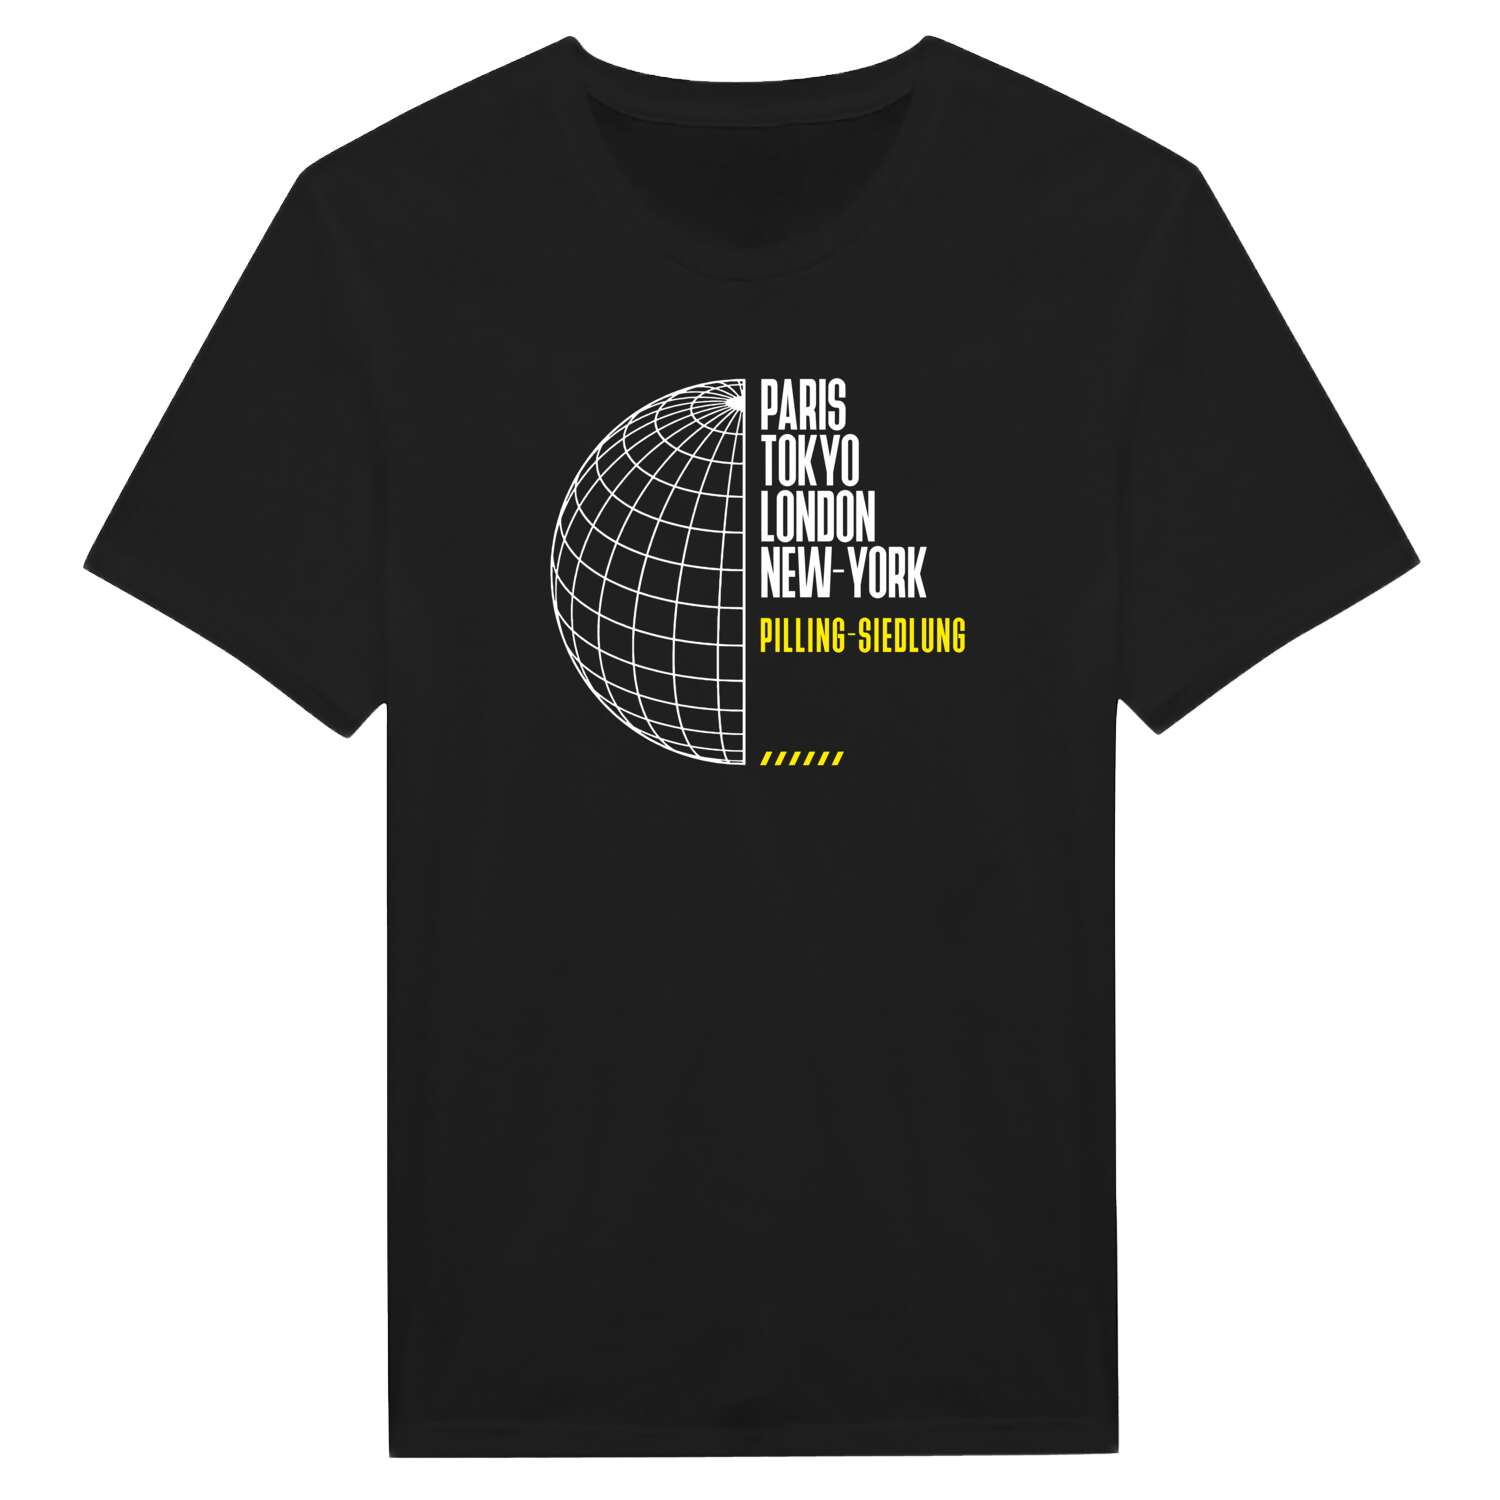 Pilling-Siedlung T-Shirt »Paris Tokyo London«